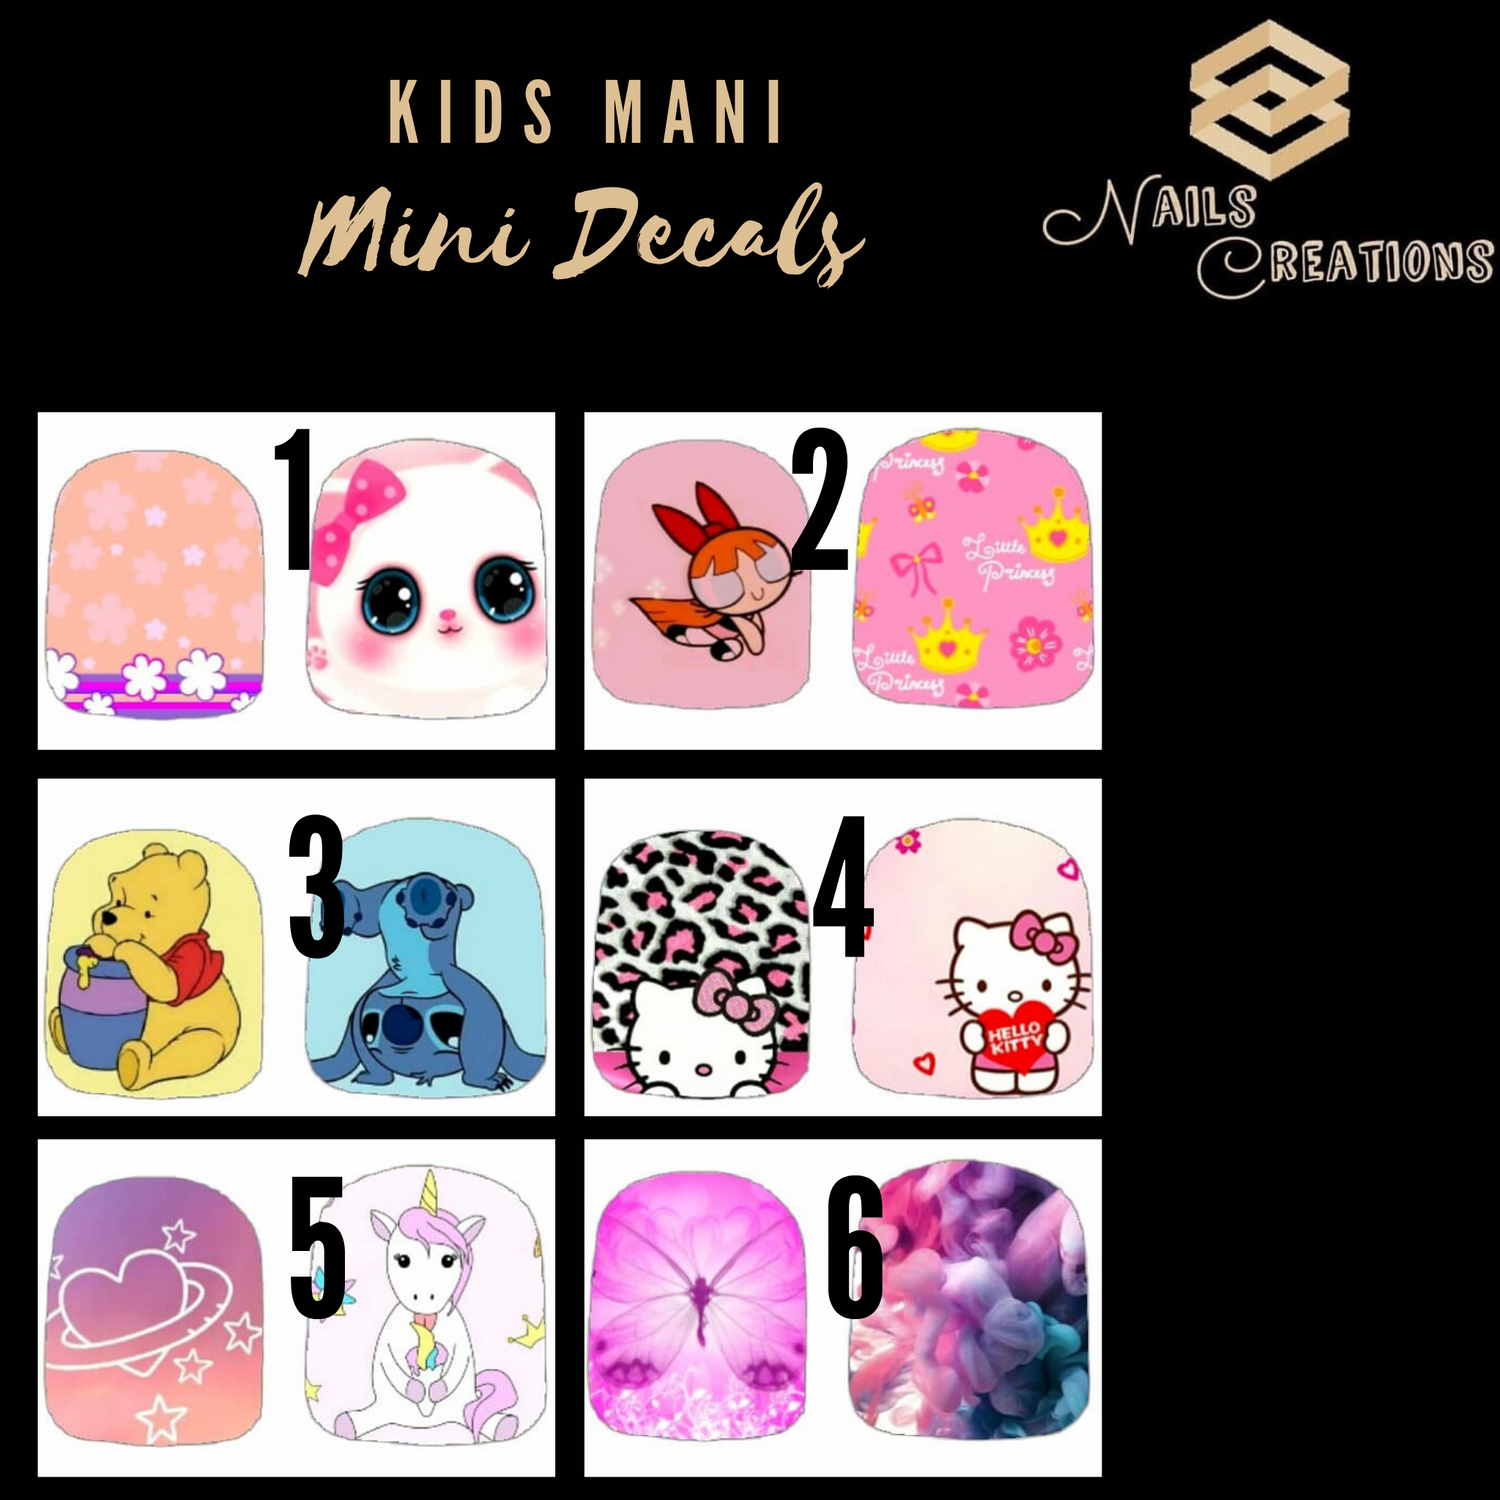 Kids Mani Mini Decals Full Nail Art Waterslide Decals - Nails Creations